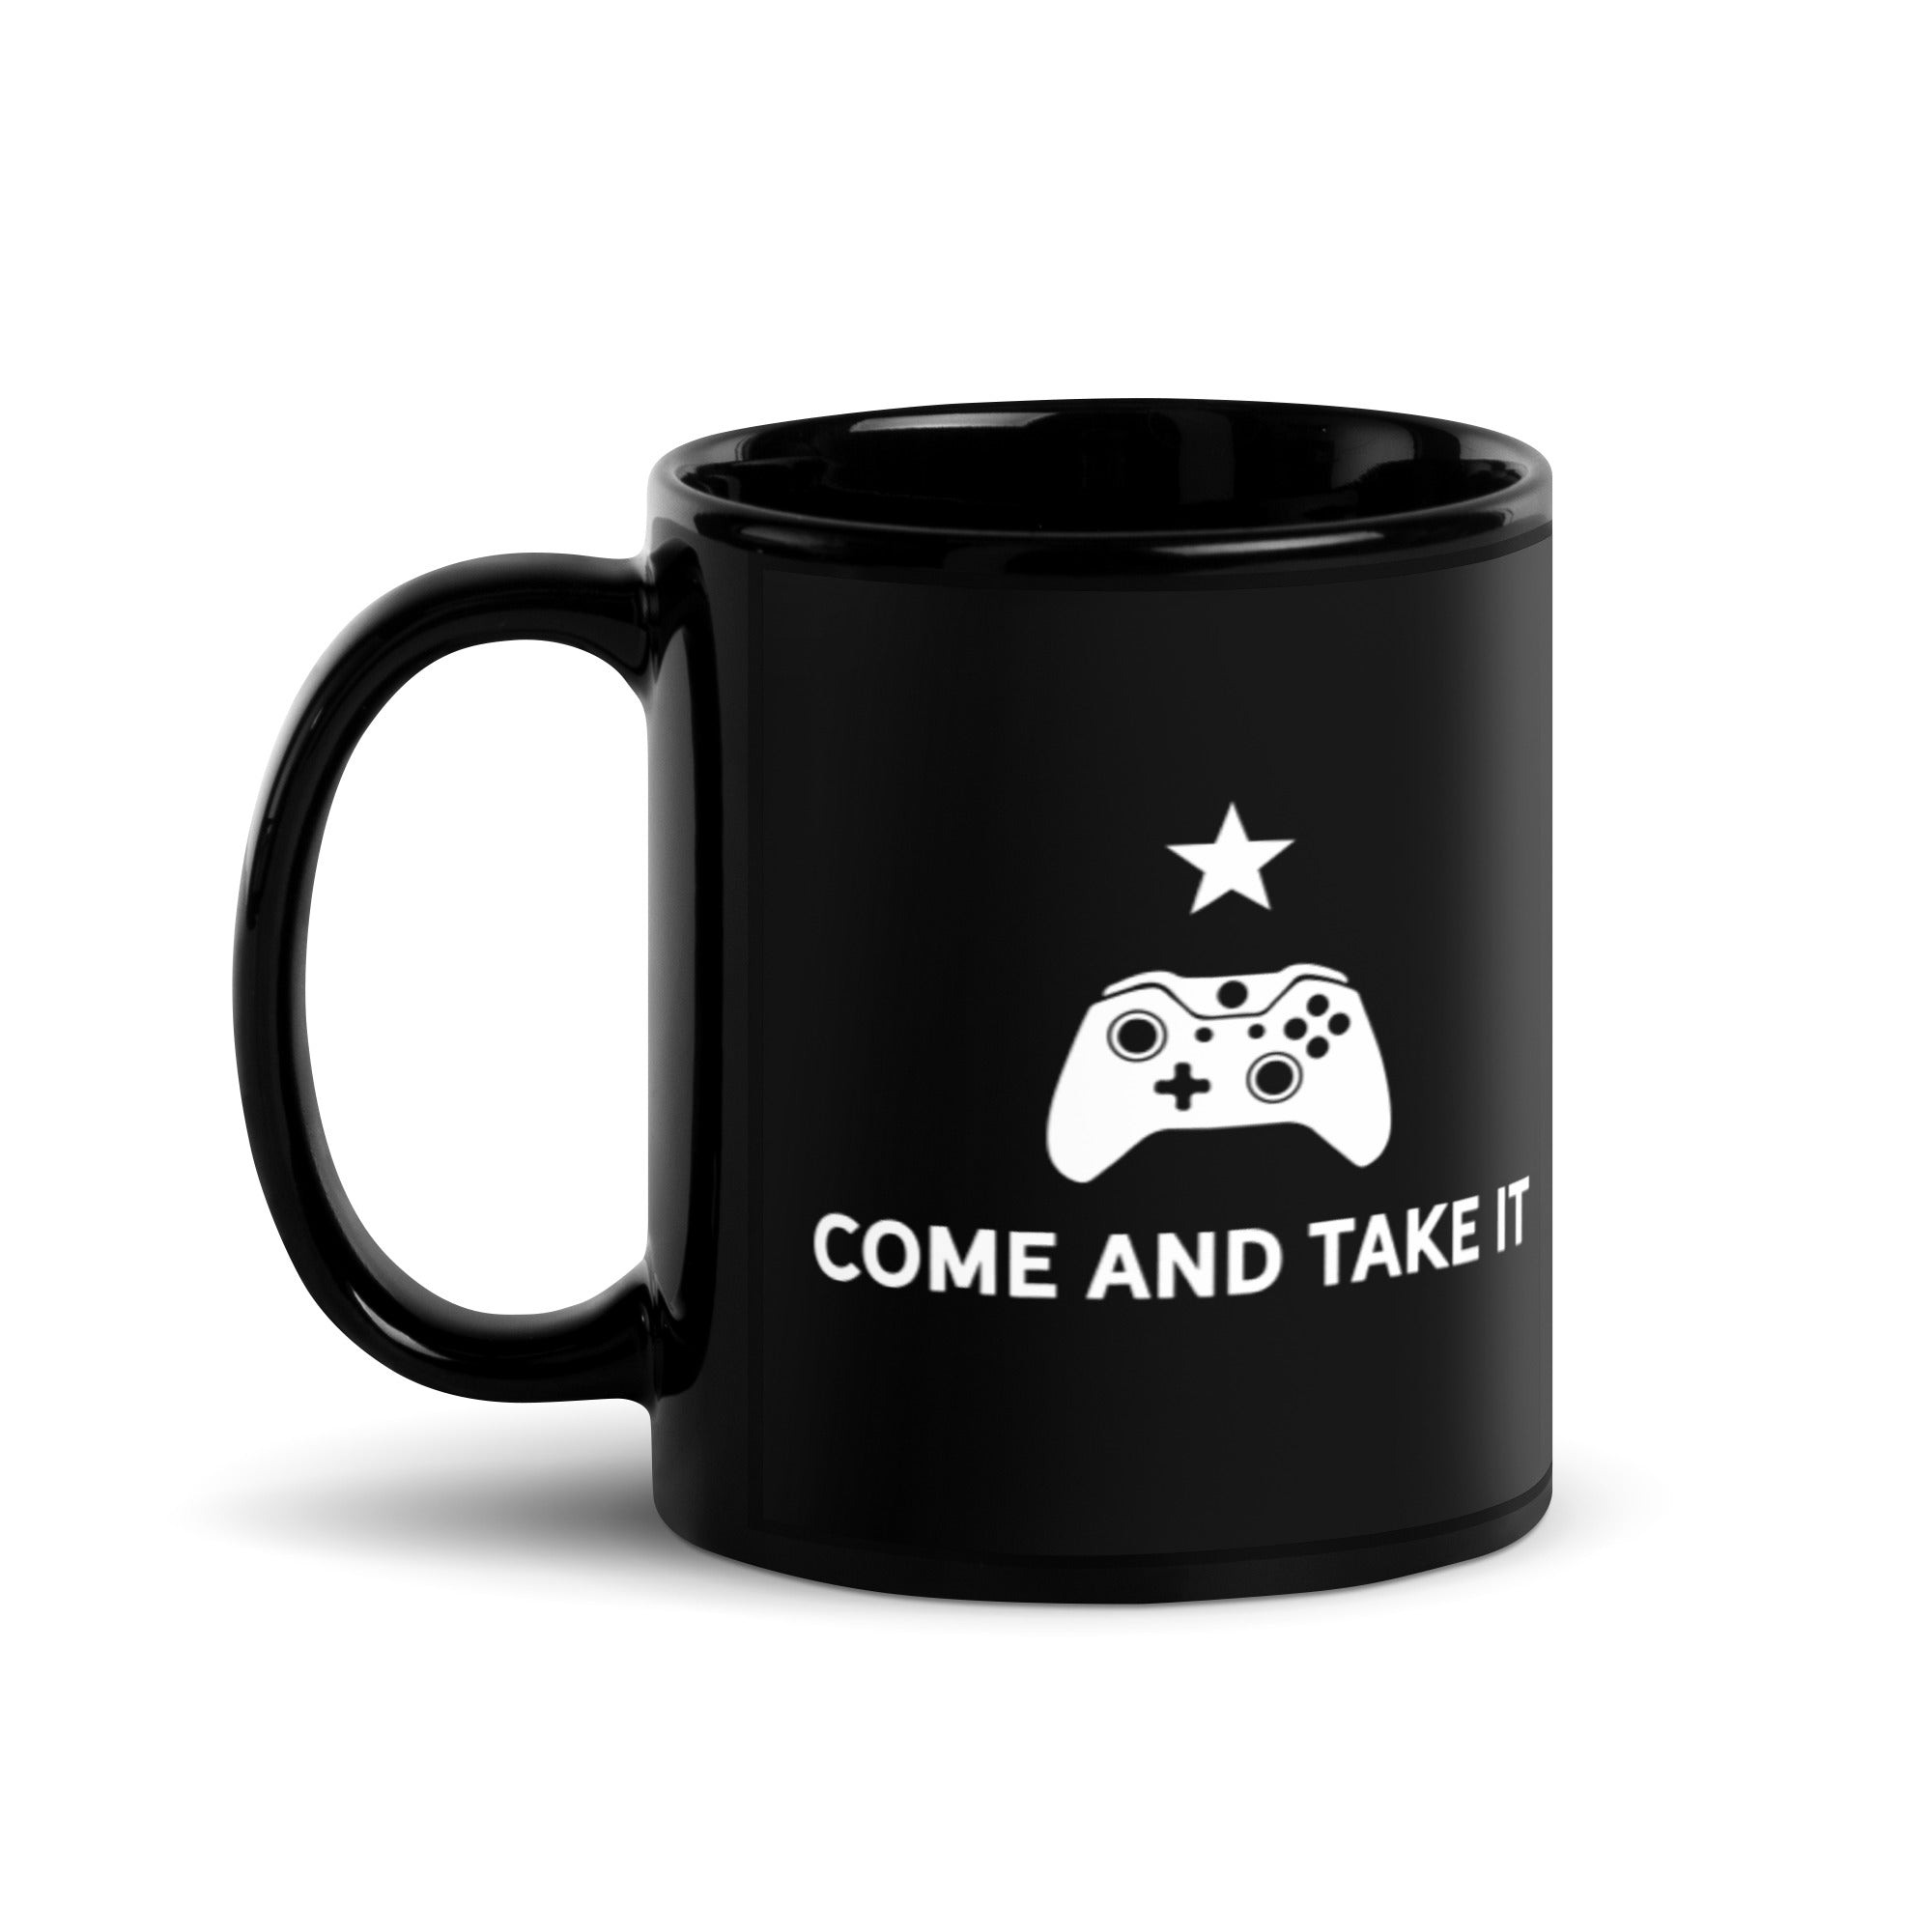 Come and Take It Video Game Controller Coffee Mug